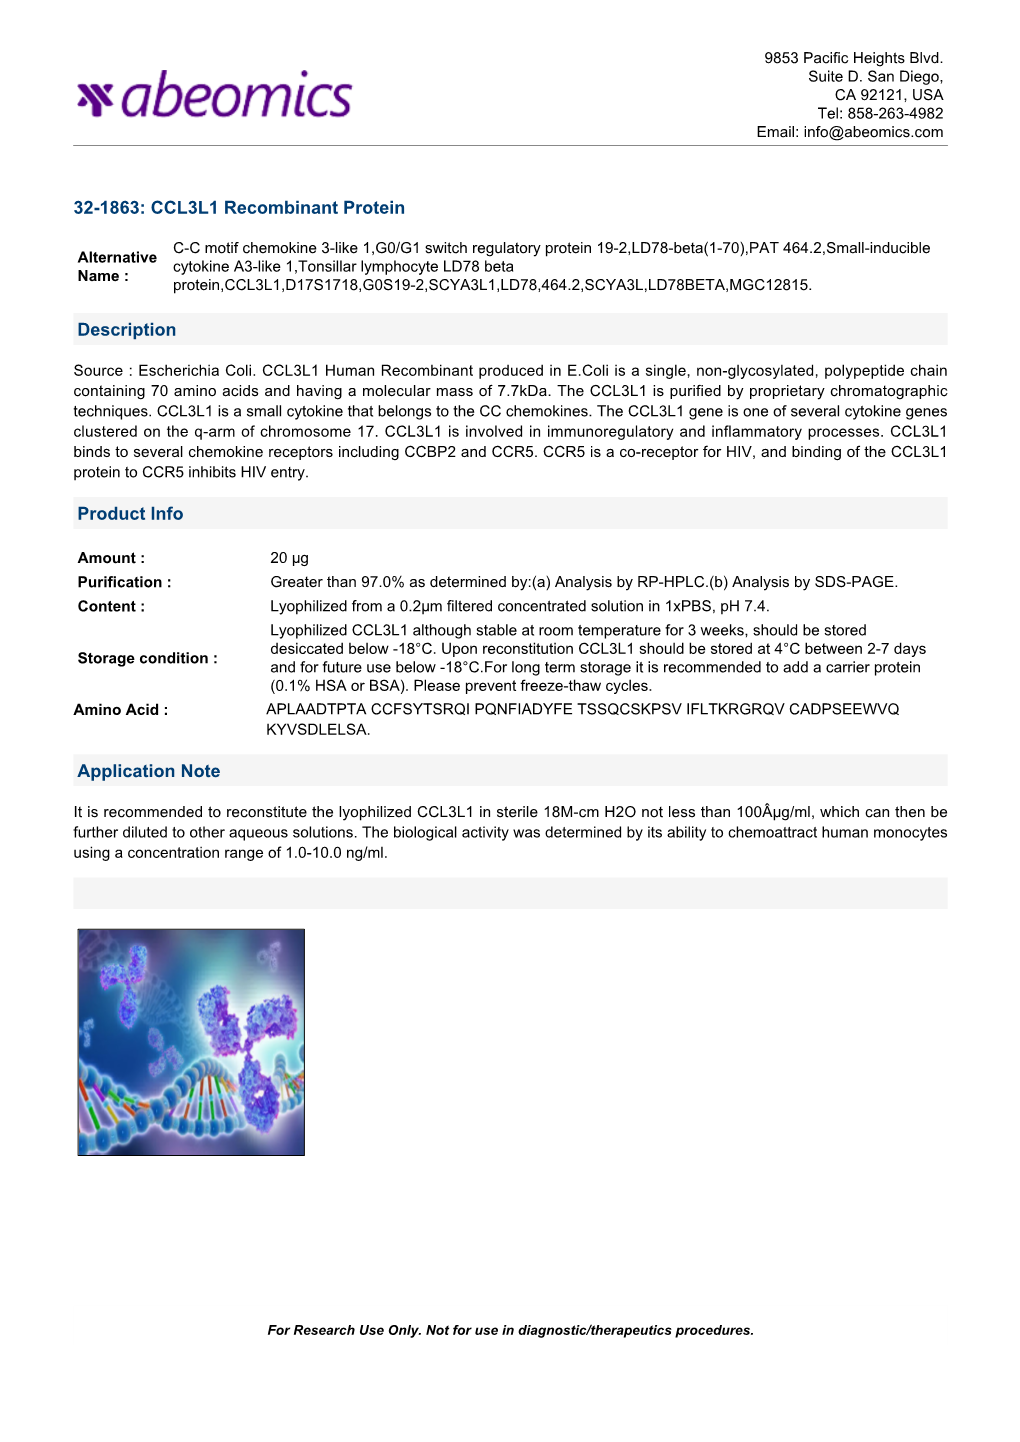 32-1863: CCL3L1 Recombinant Protein Description